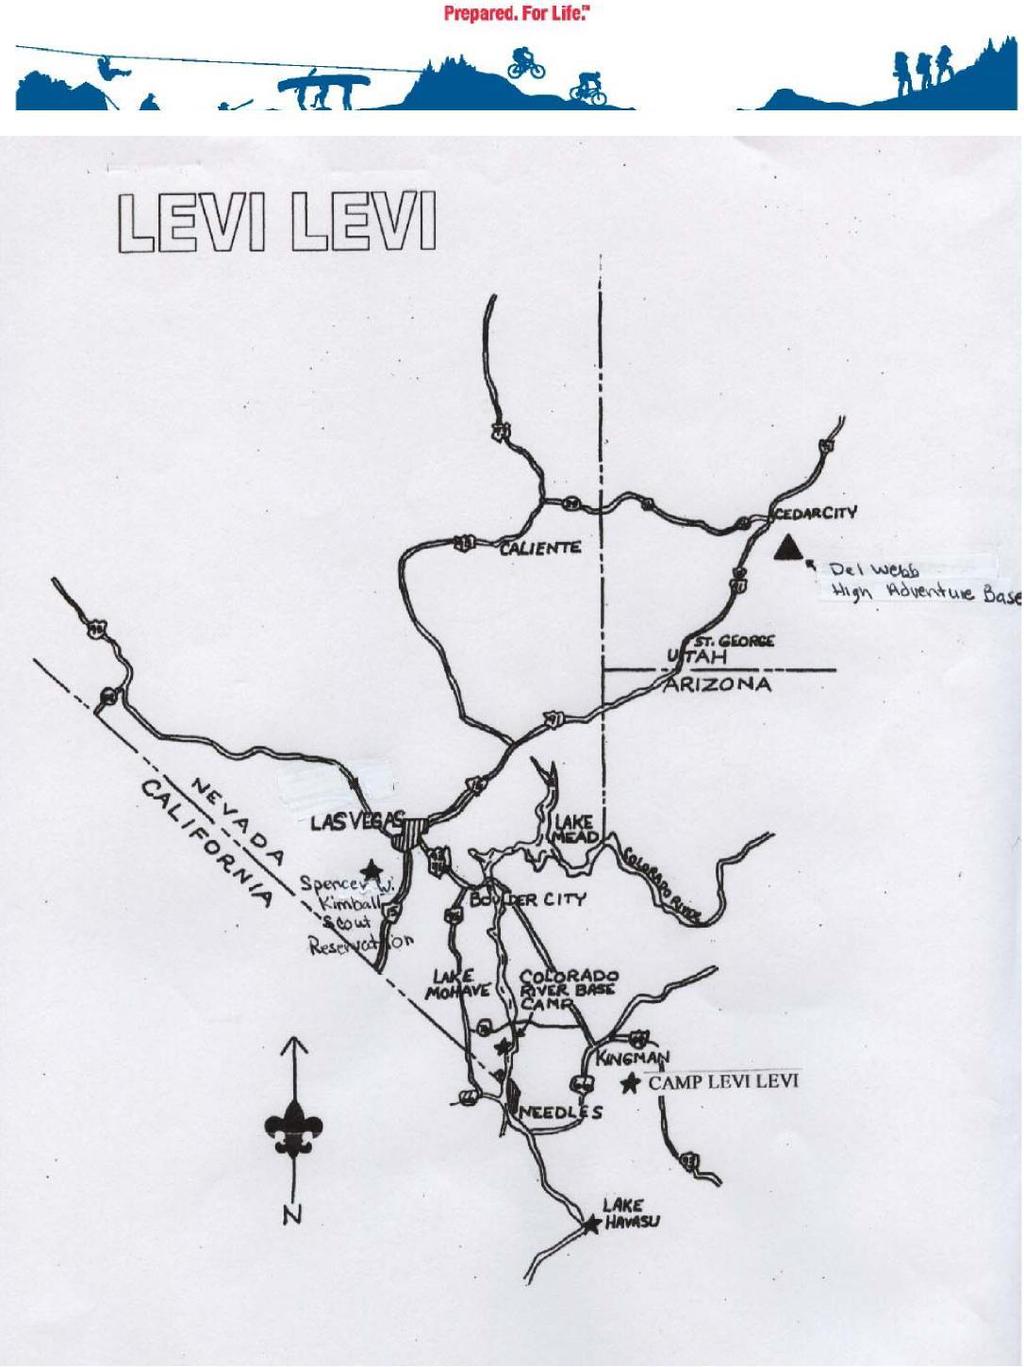 Camp Levi Levi